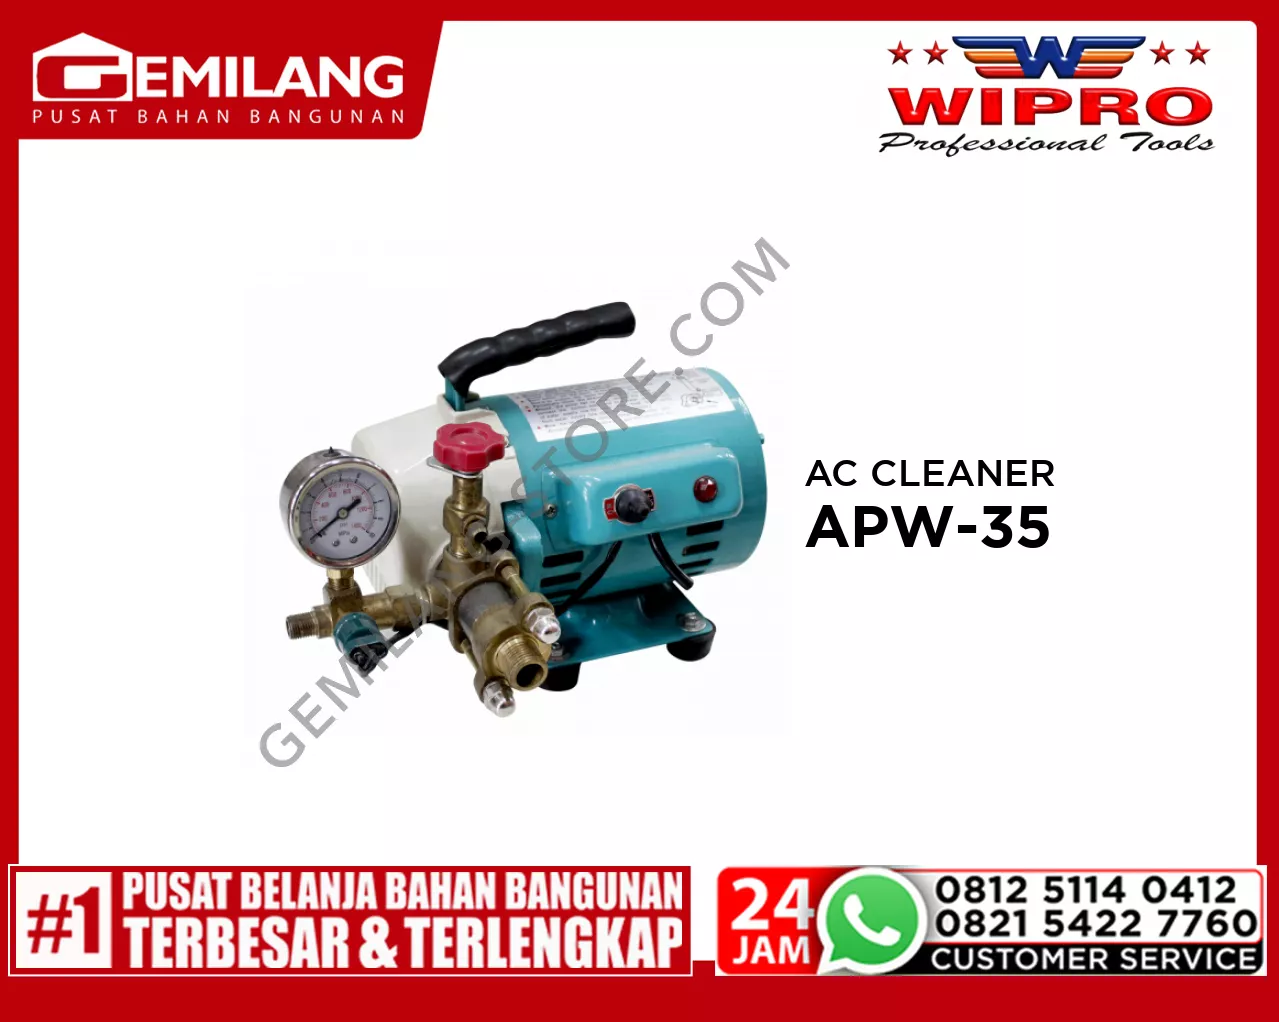 WIPRO AC CLEANER APW-35